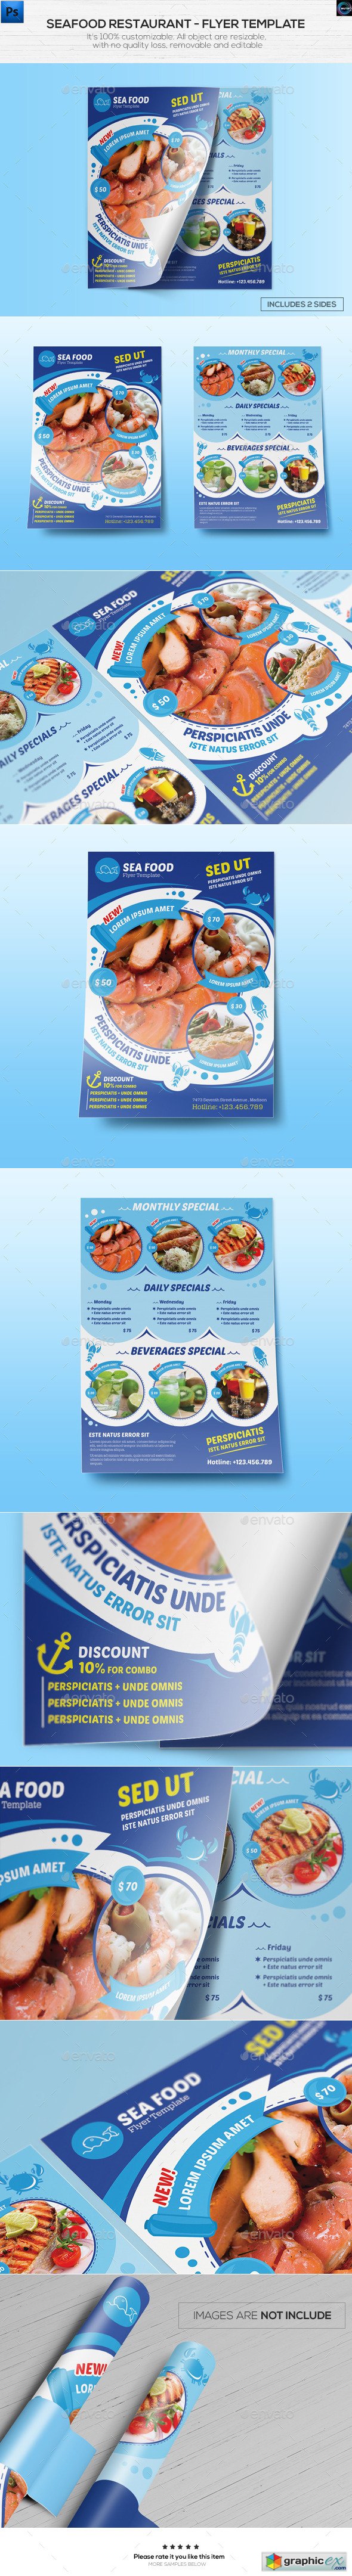 Seafood Restaurant - Flyer Template